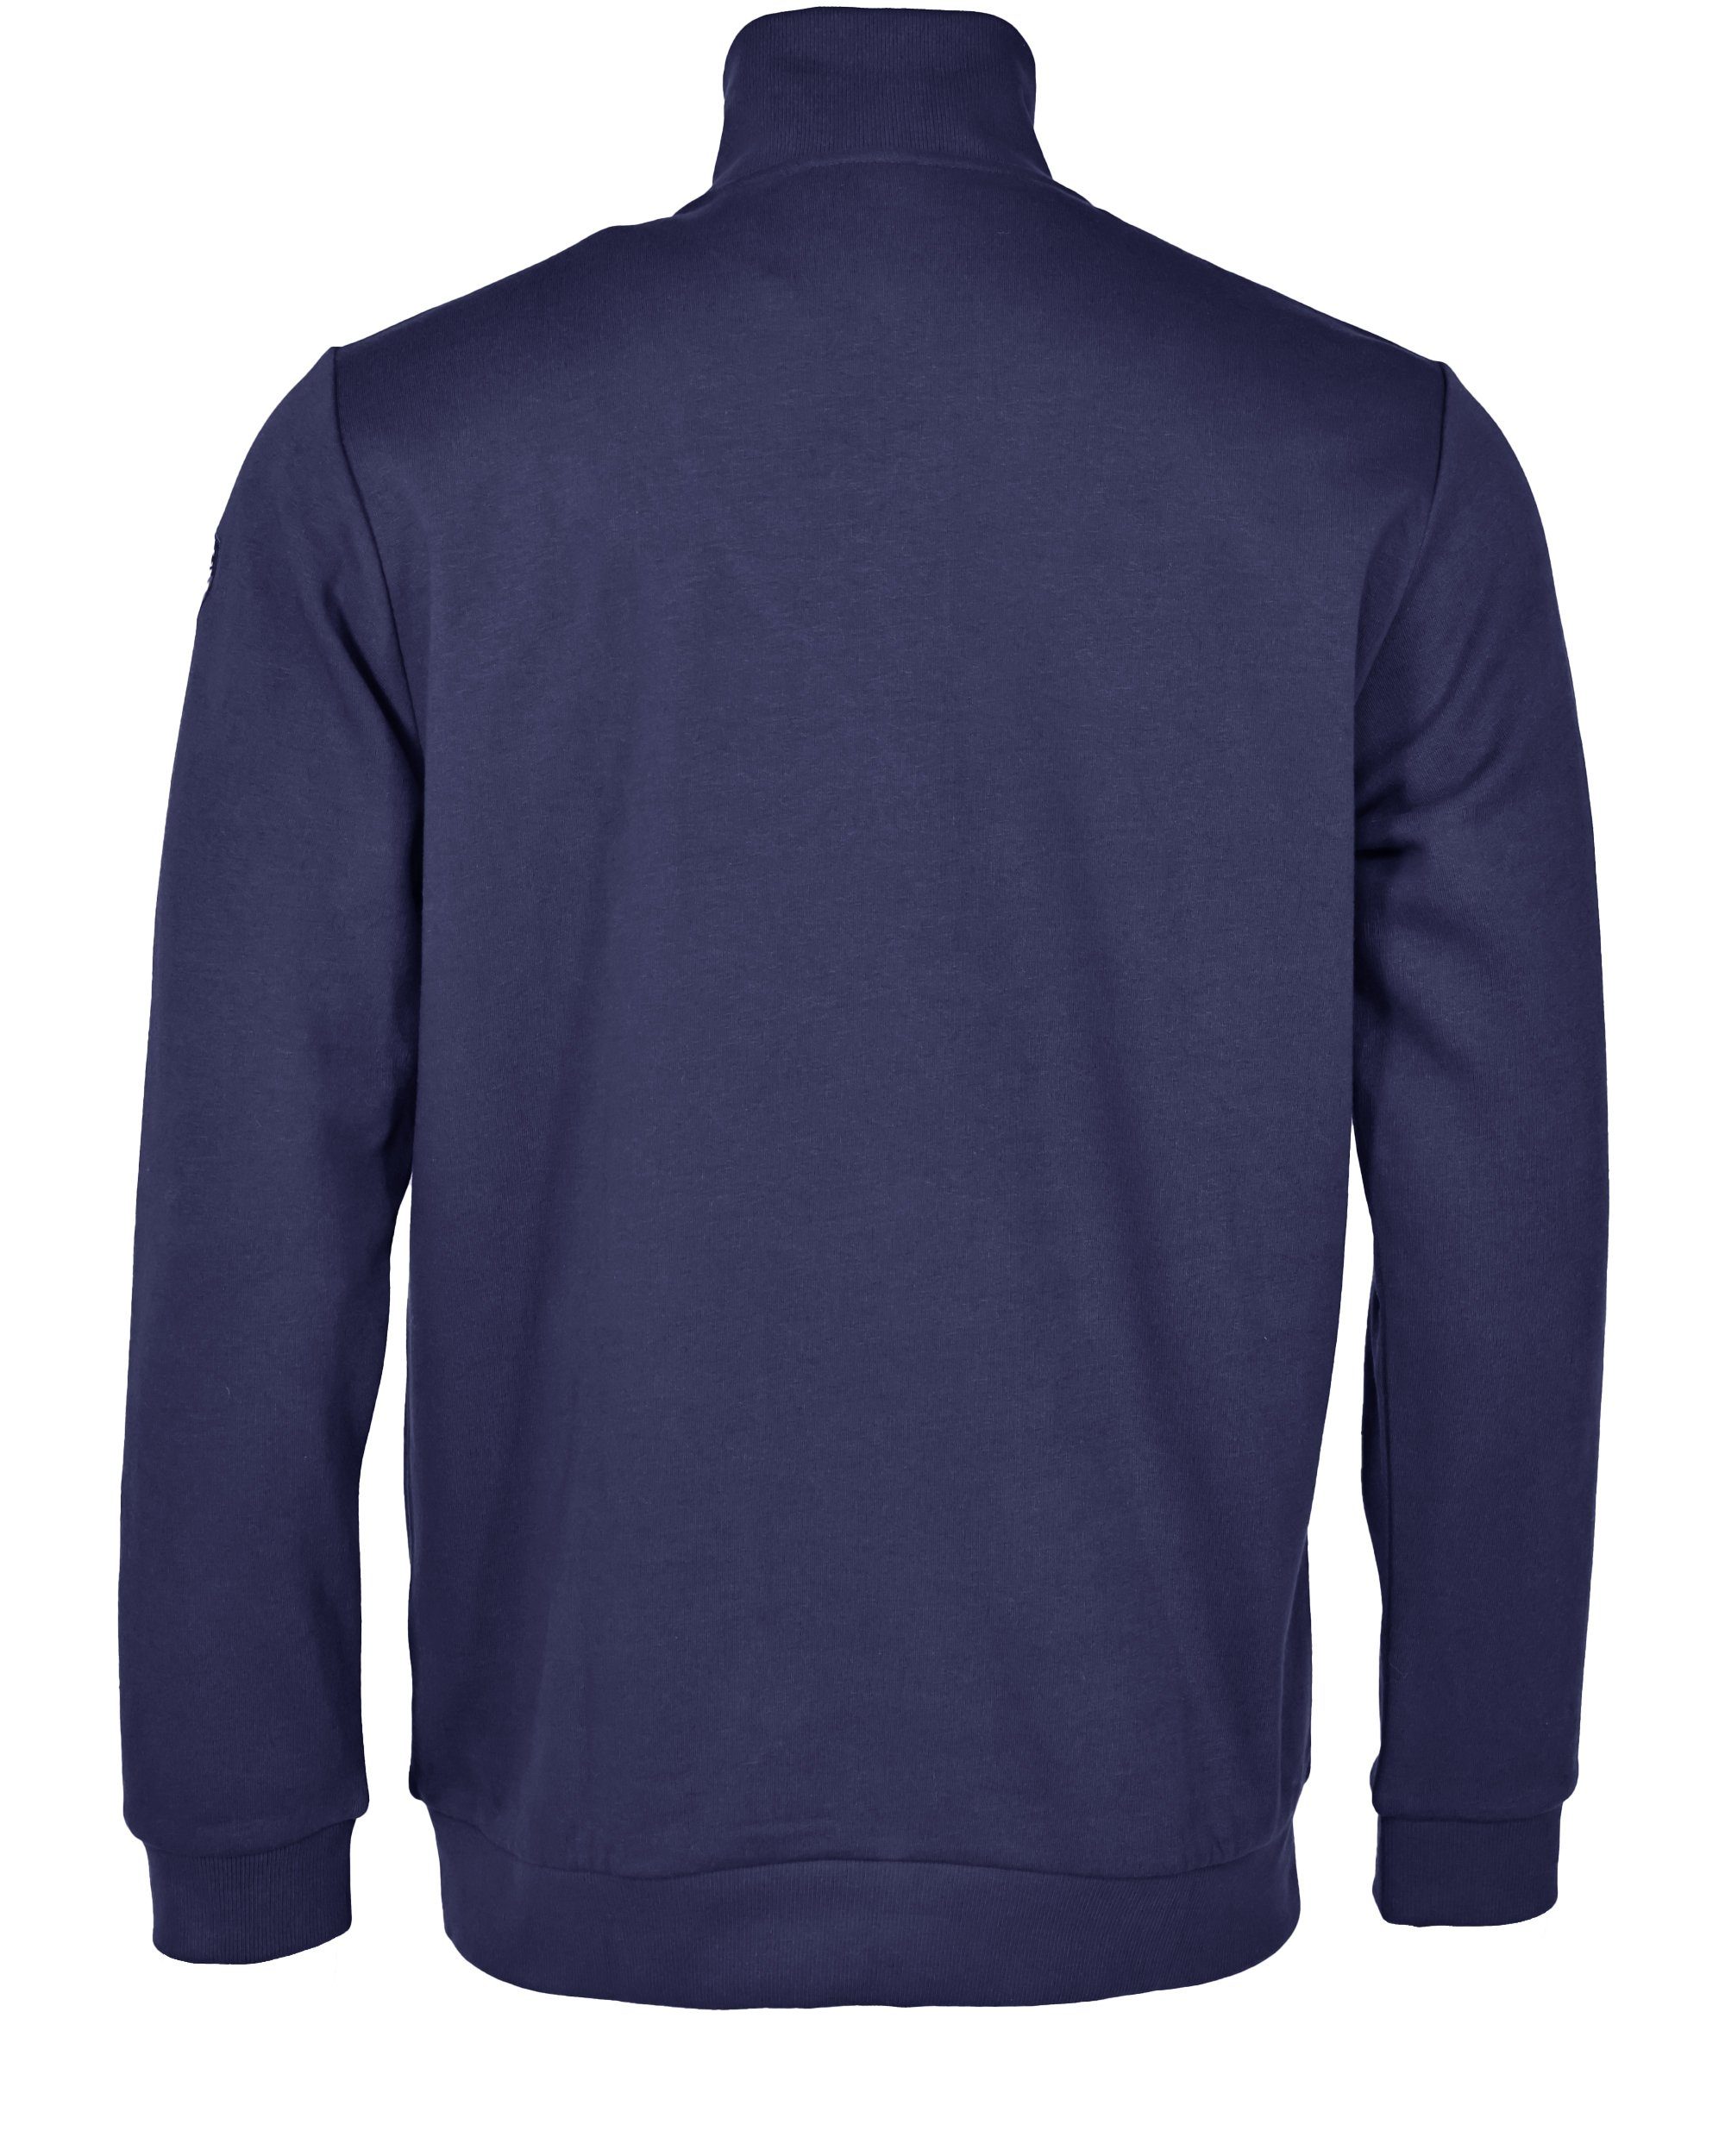 JCC 310212062 navy Sweatshirt